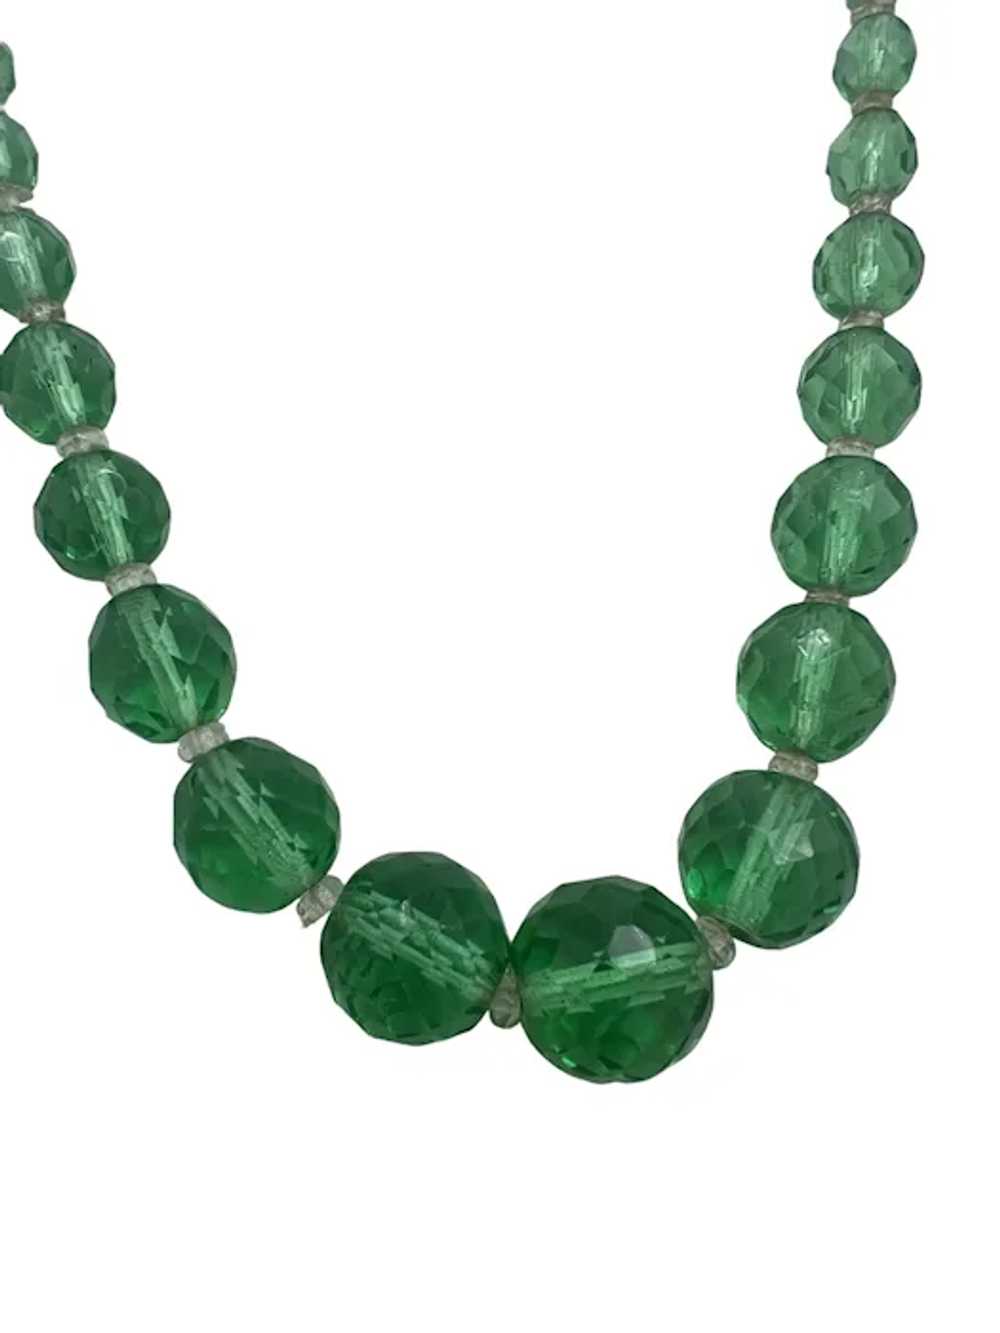 Vintage Green Cut Crystal Necklace - image 2